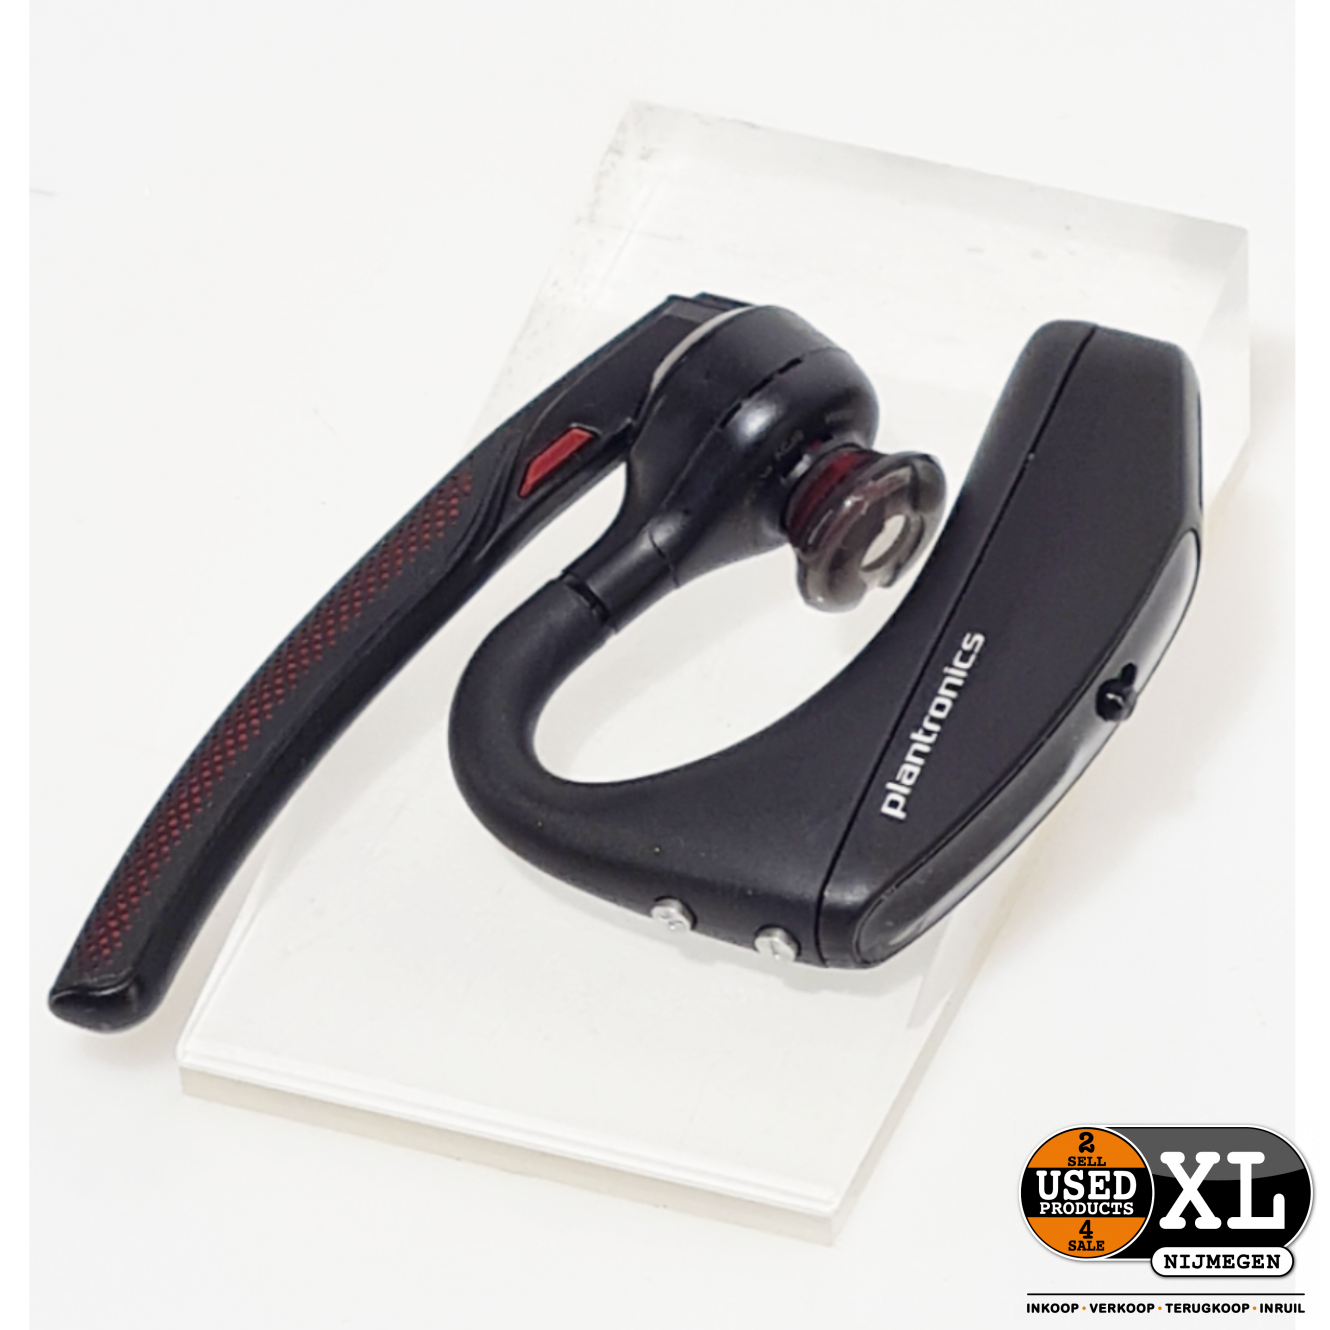 Tomaat Derbevilletest Zuivelproducten Plantronics Voyager 5200 Bluetooth Headset | Nette Staat - Used Products  Nijmegen XL